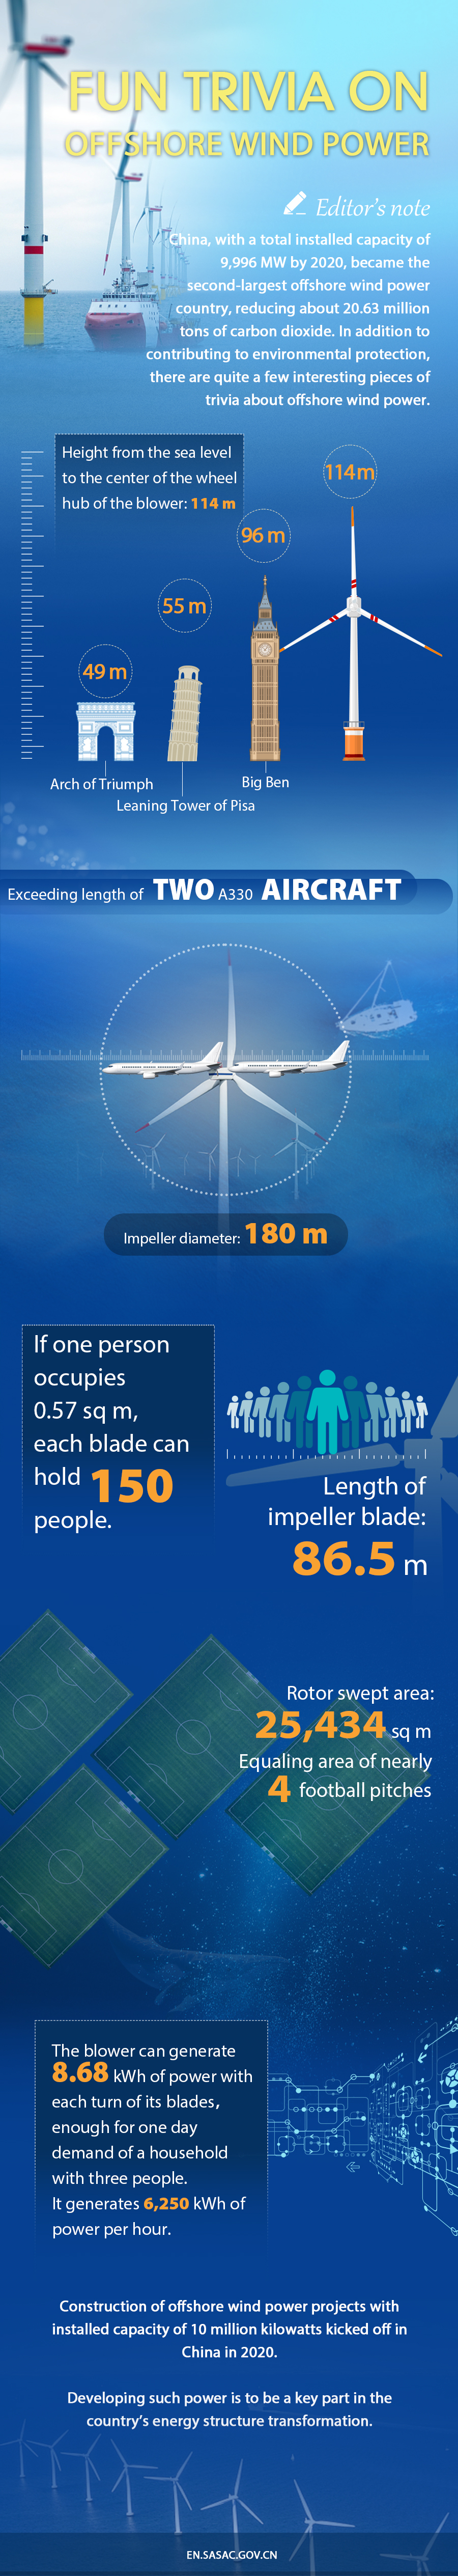 Fun-trivia-on-offshore-wind-power-2.jpg